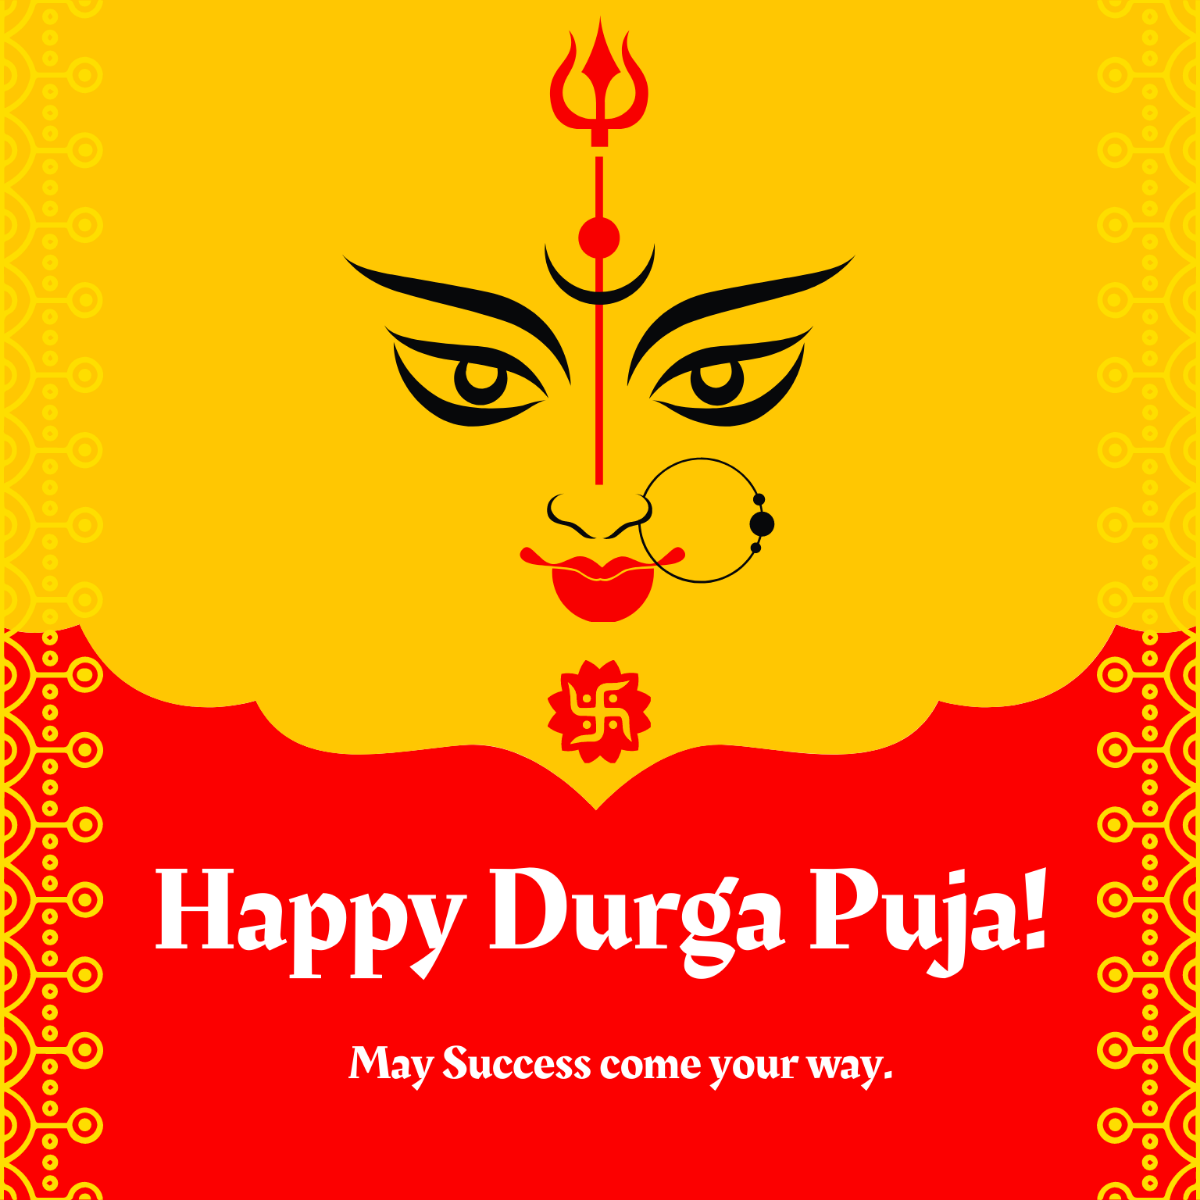 Durga Puja Greeting Card Vector Template